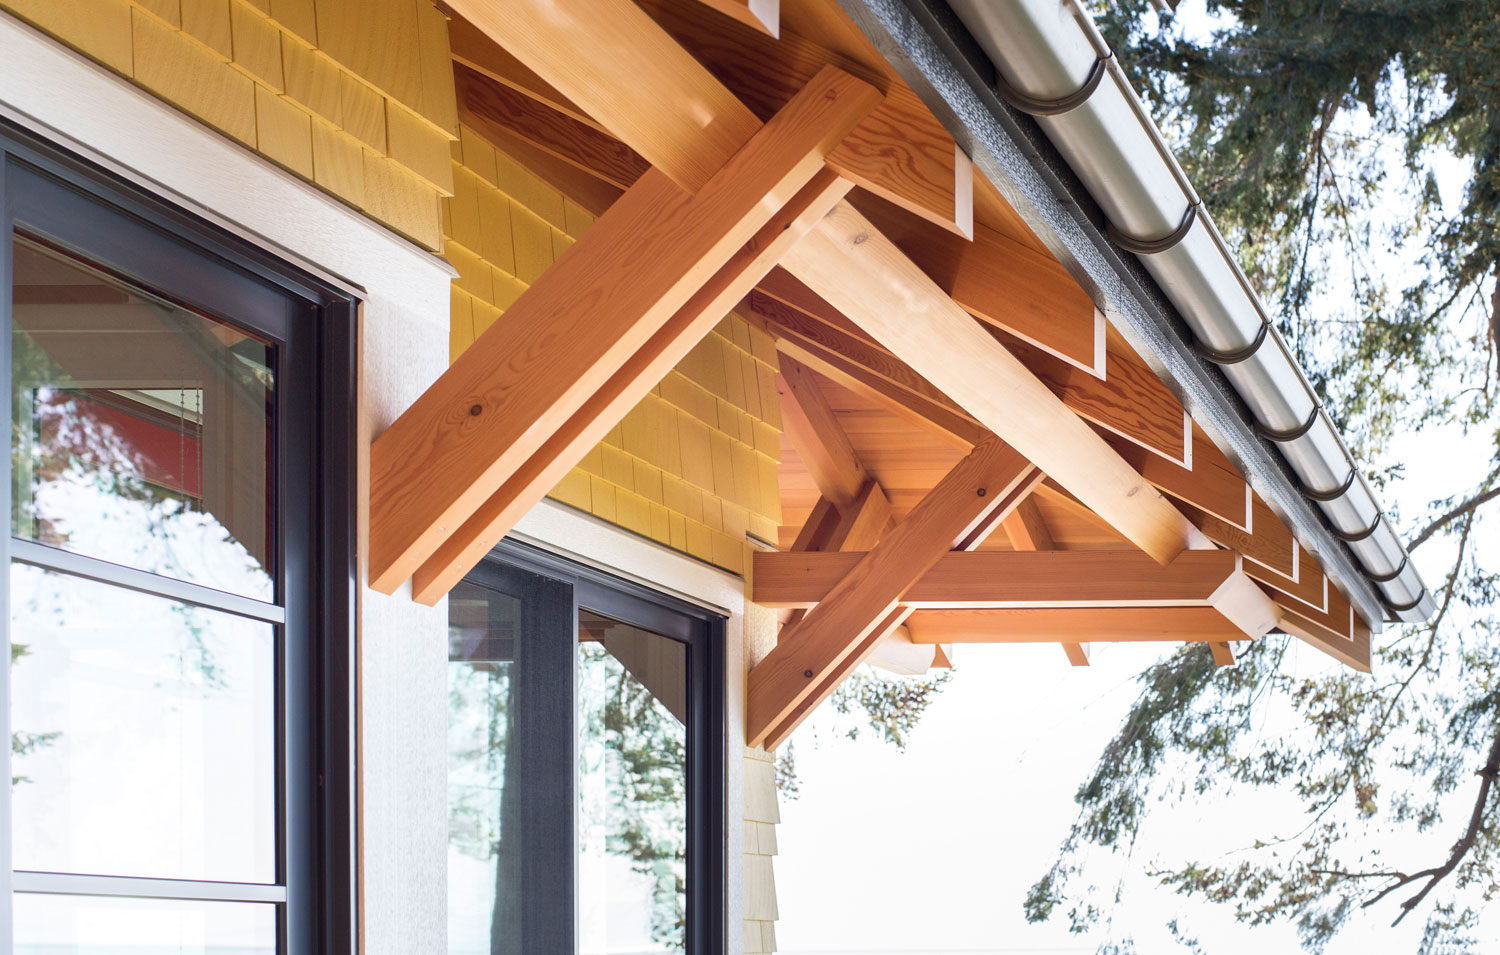 Outside roof beam support made of HemFir wood